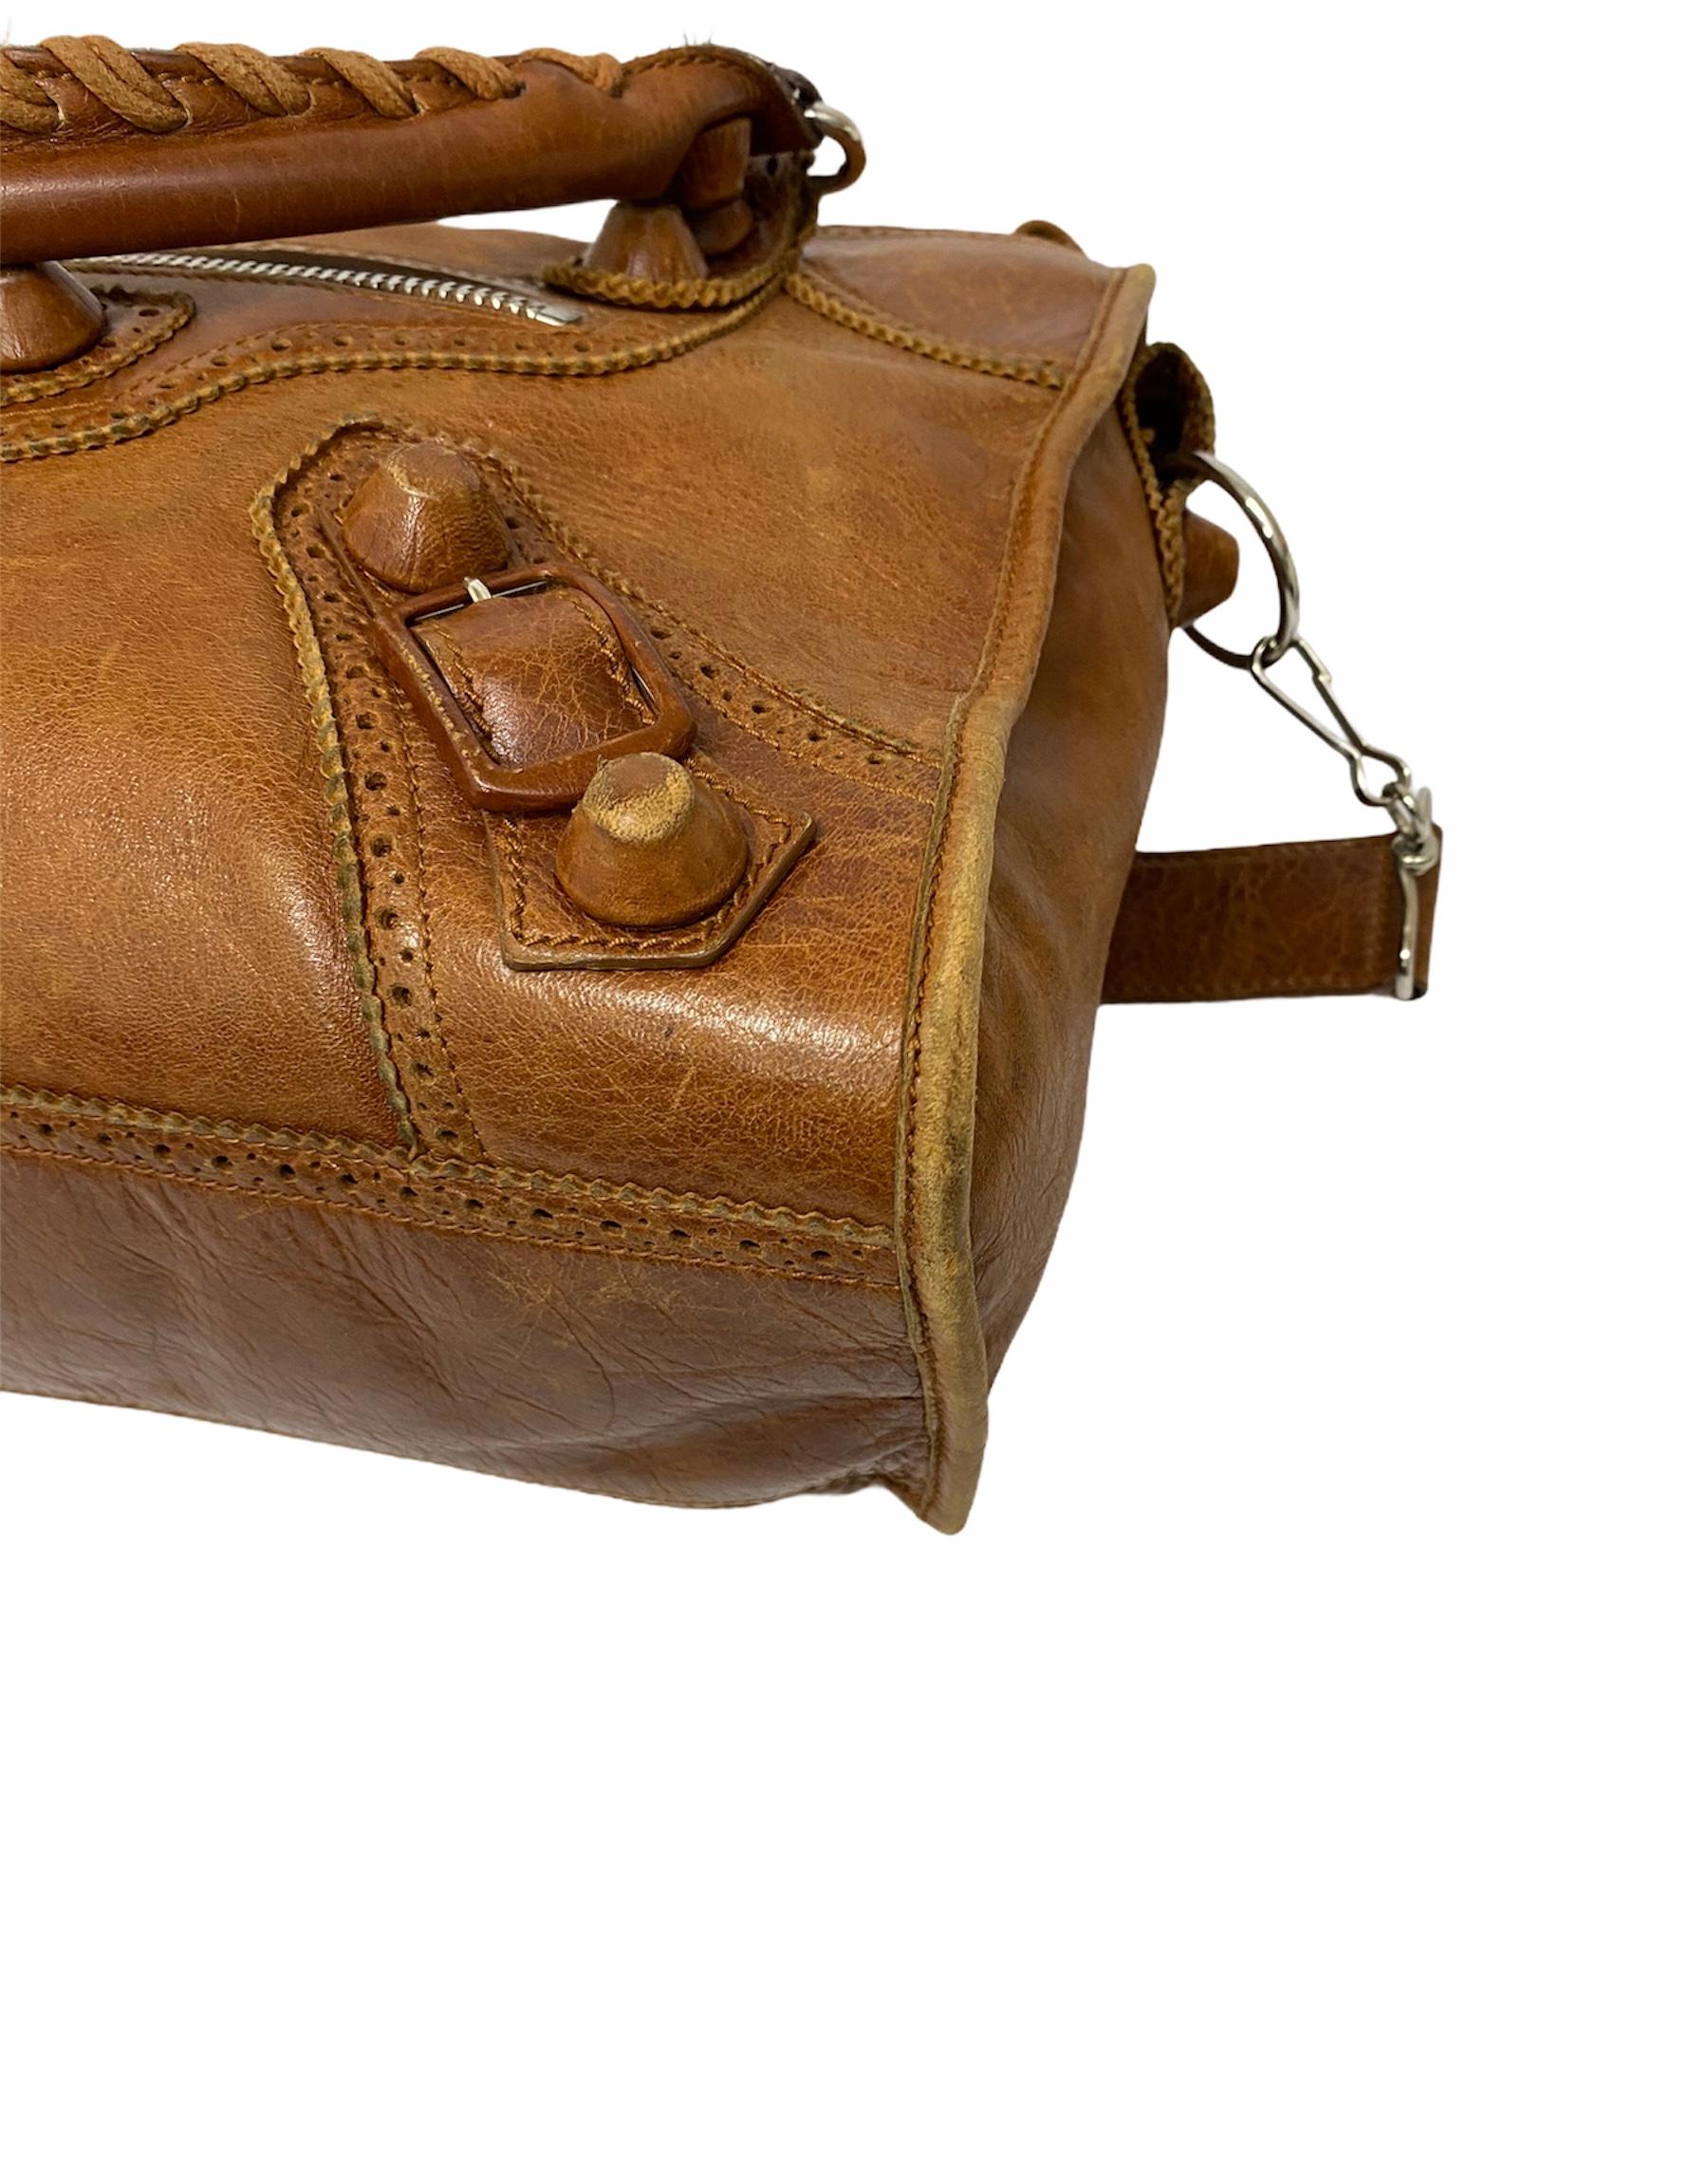 Balenciaga Brown Leather City Bag with Silver Hardware 1